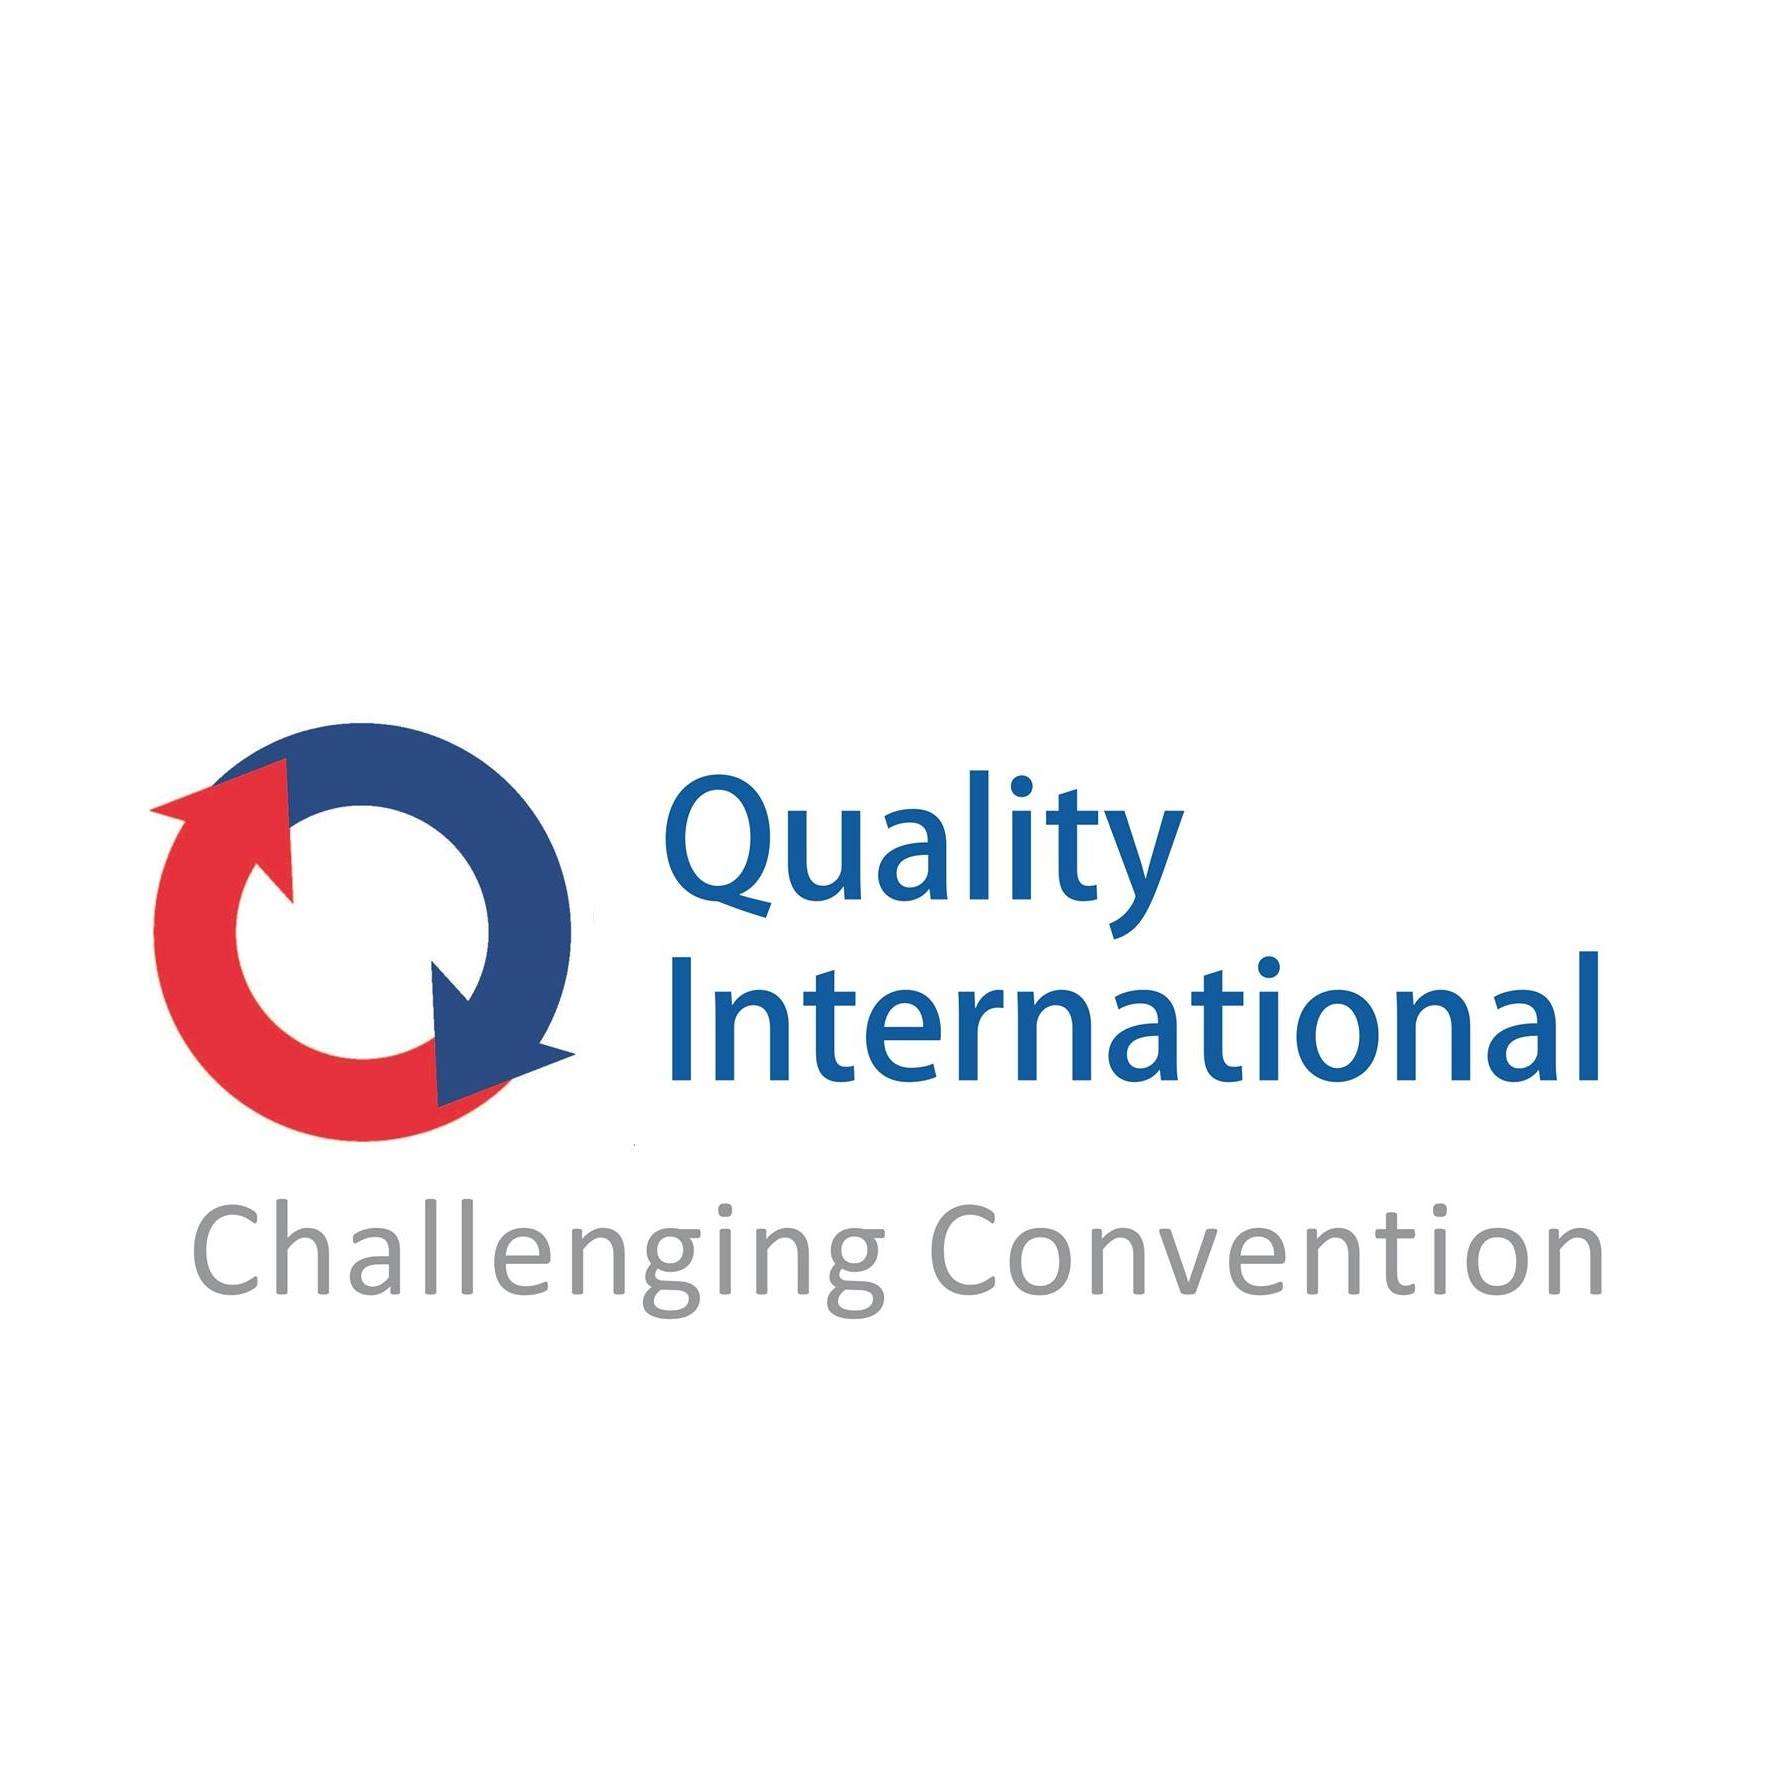 Quality International - Crunchbase Company Profile & Funding